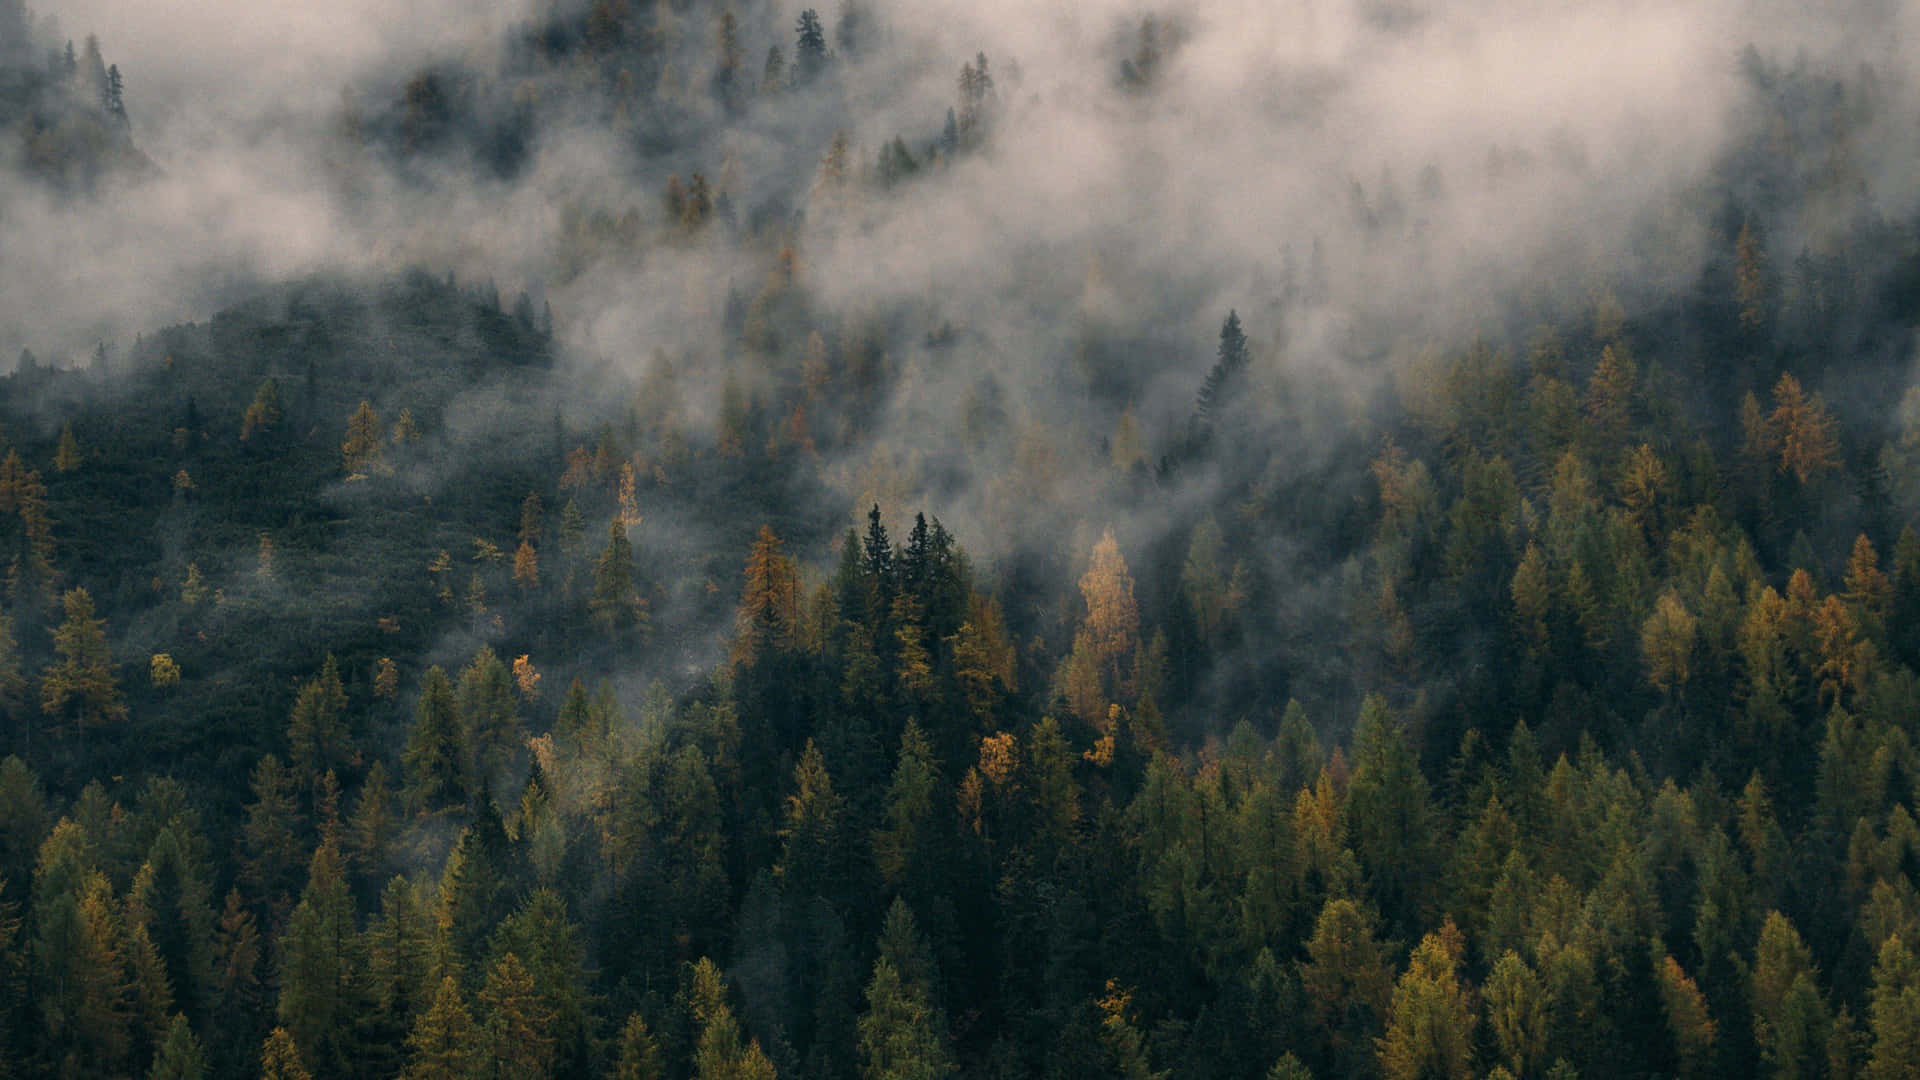 Nature's misty haze creates a calming atmosphere.